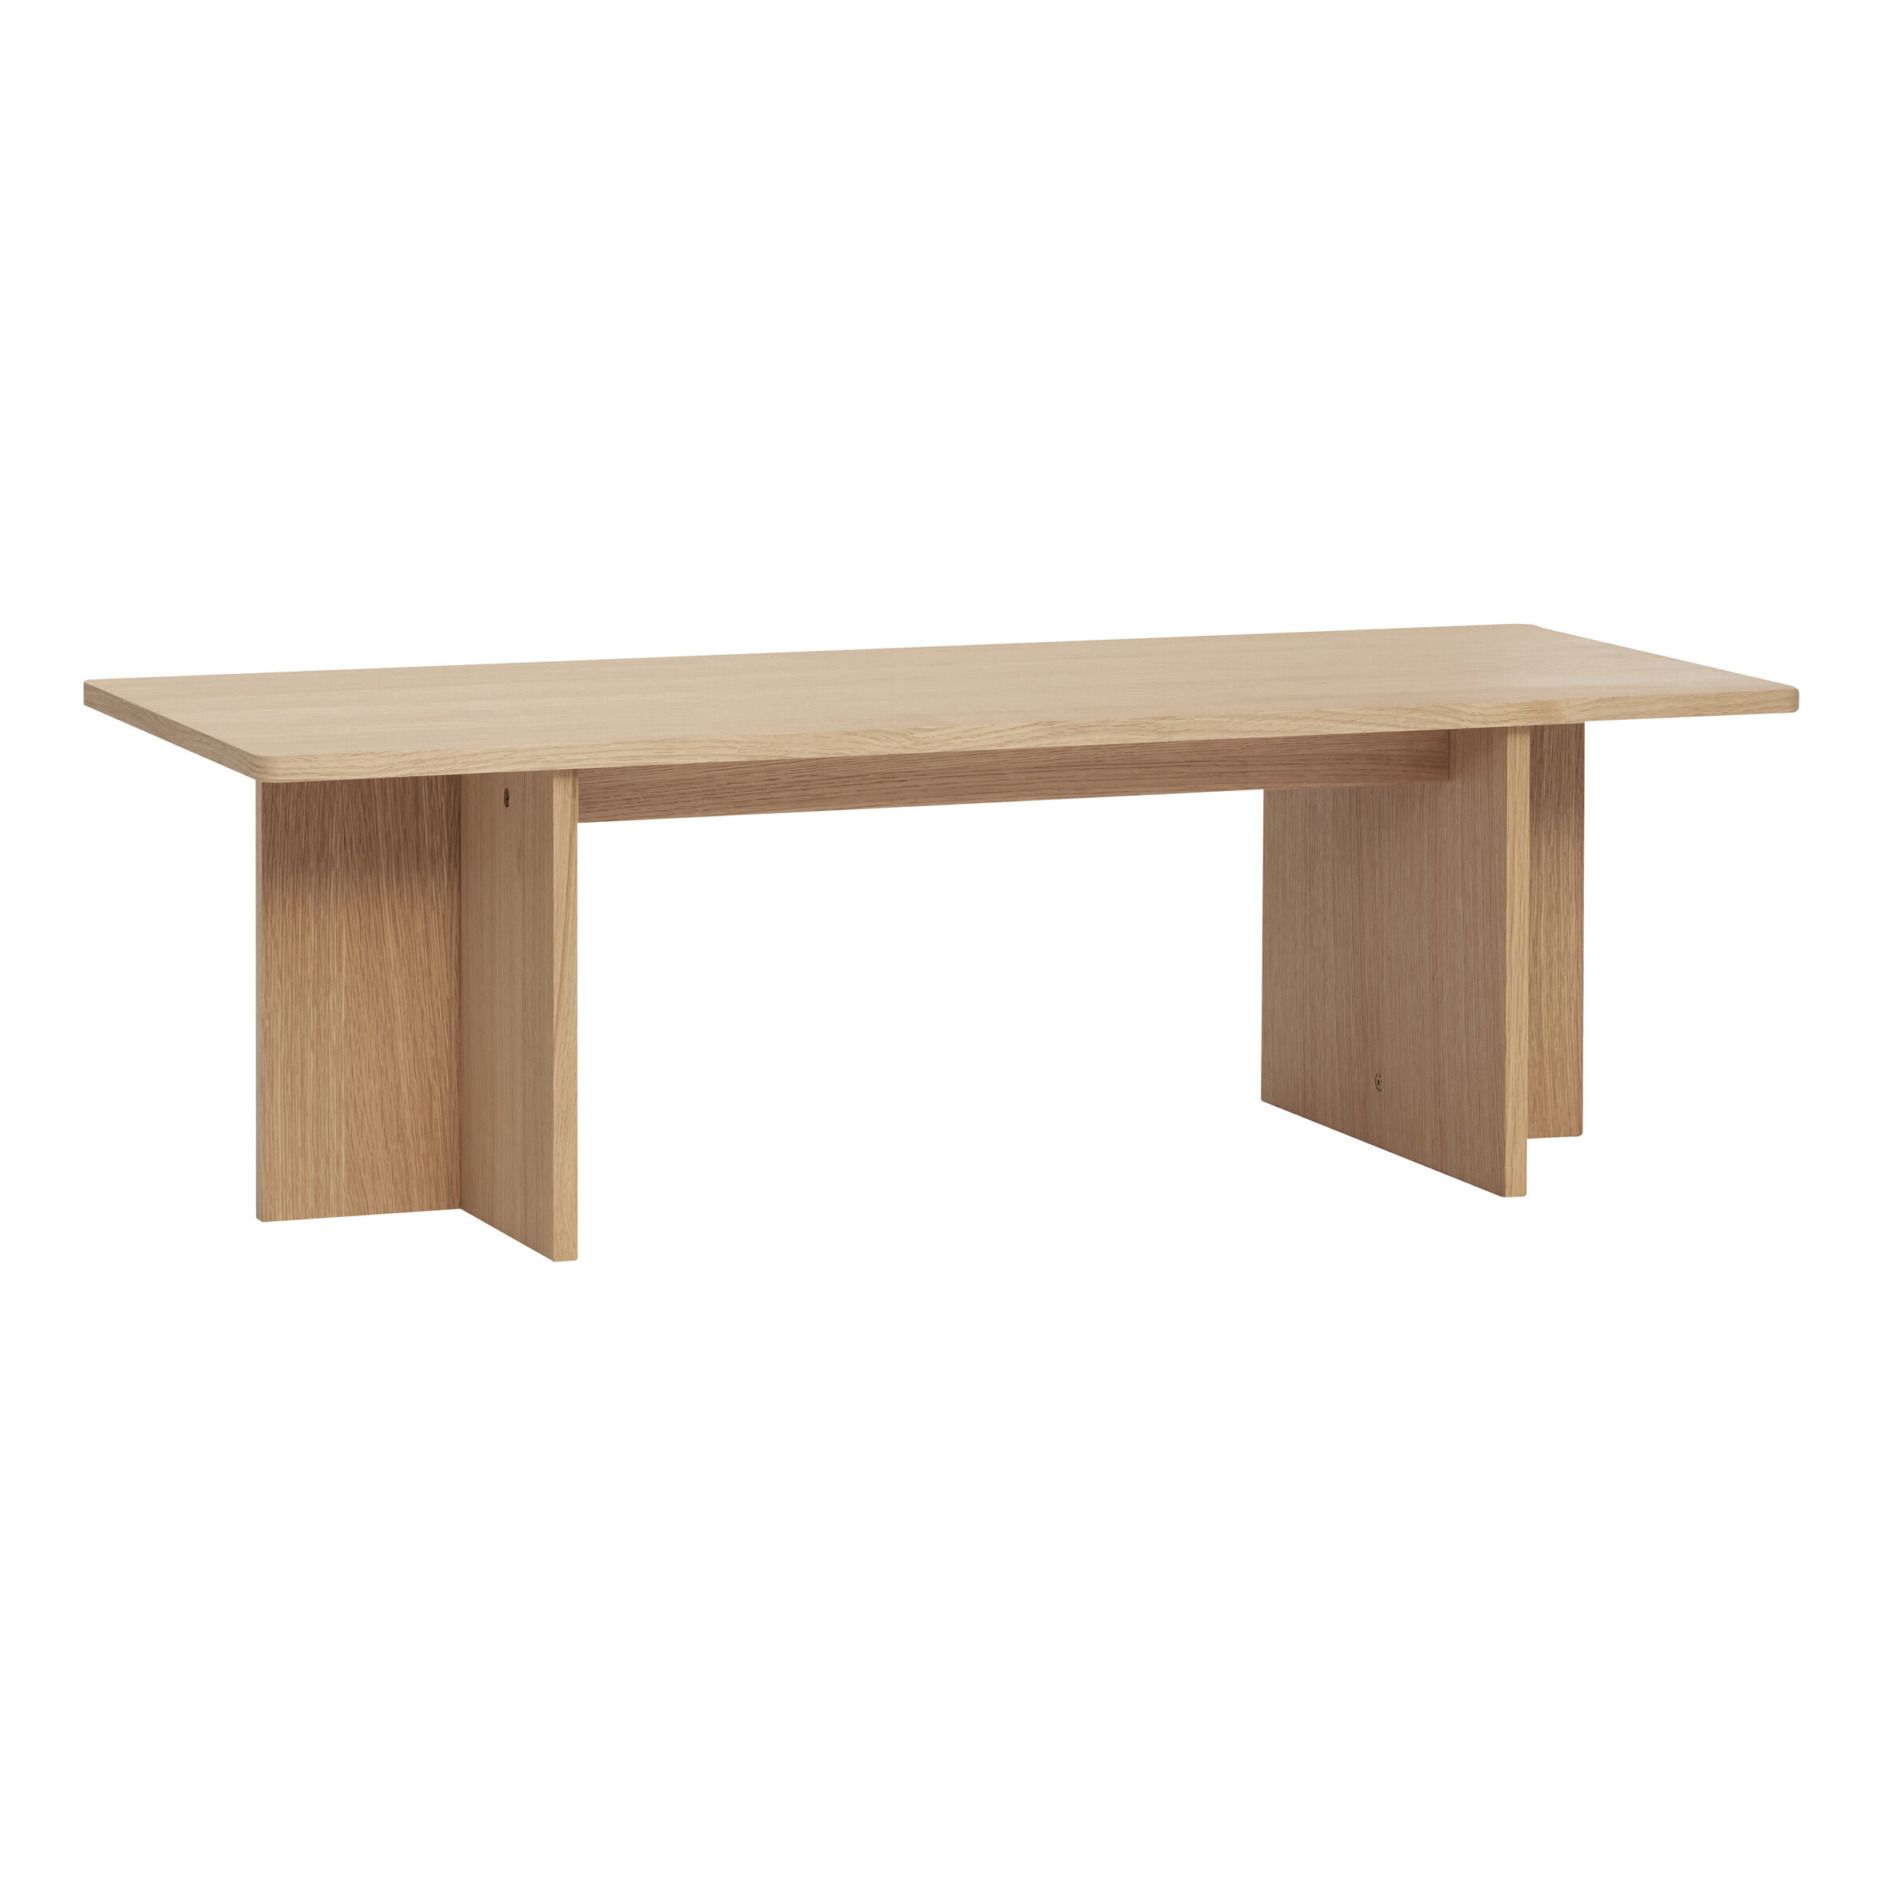 Hubsch - Table basse rectangulaire en bois FSC - Chêne